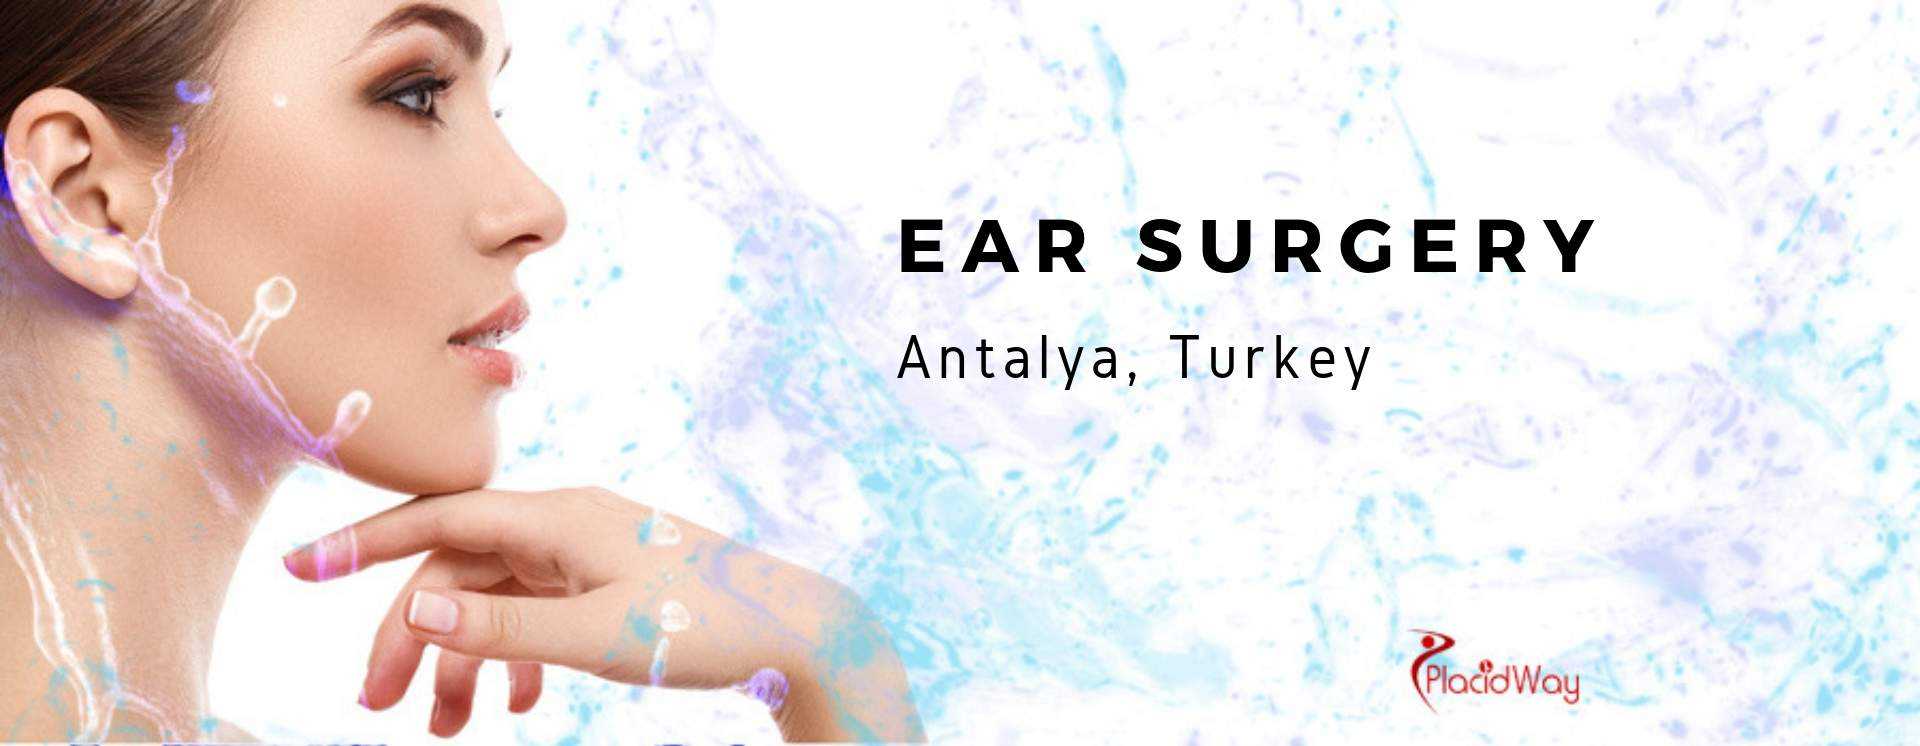 Ear Surgery in Antalya, Turkey